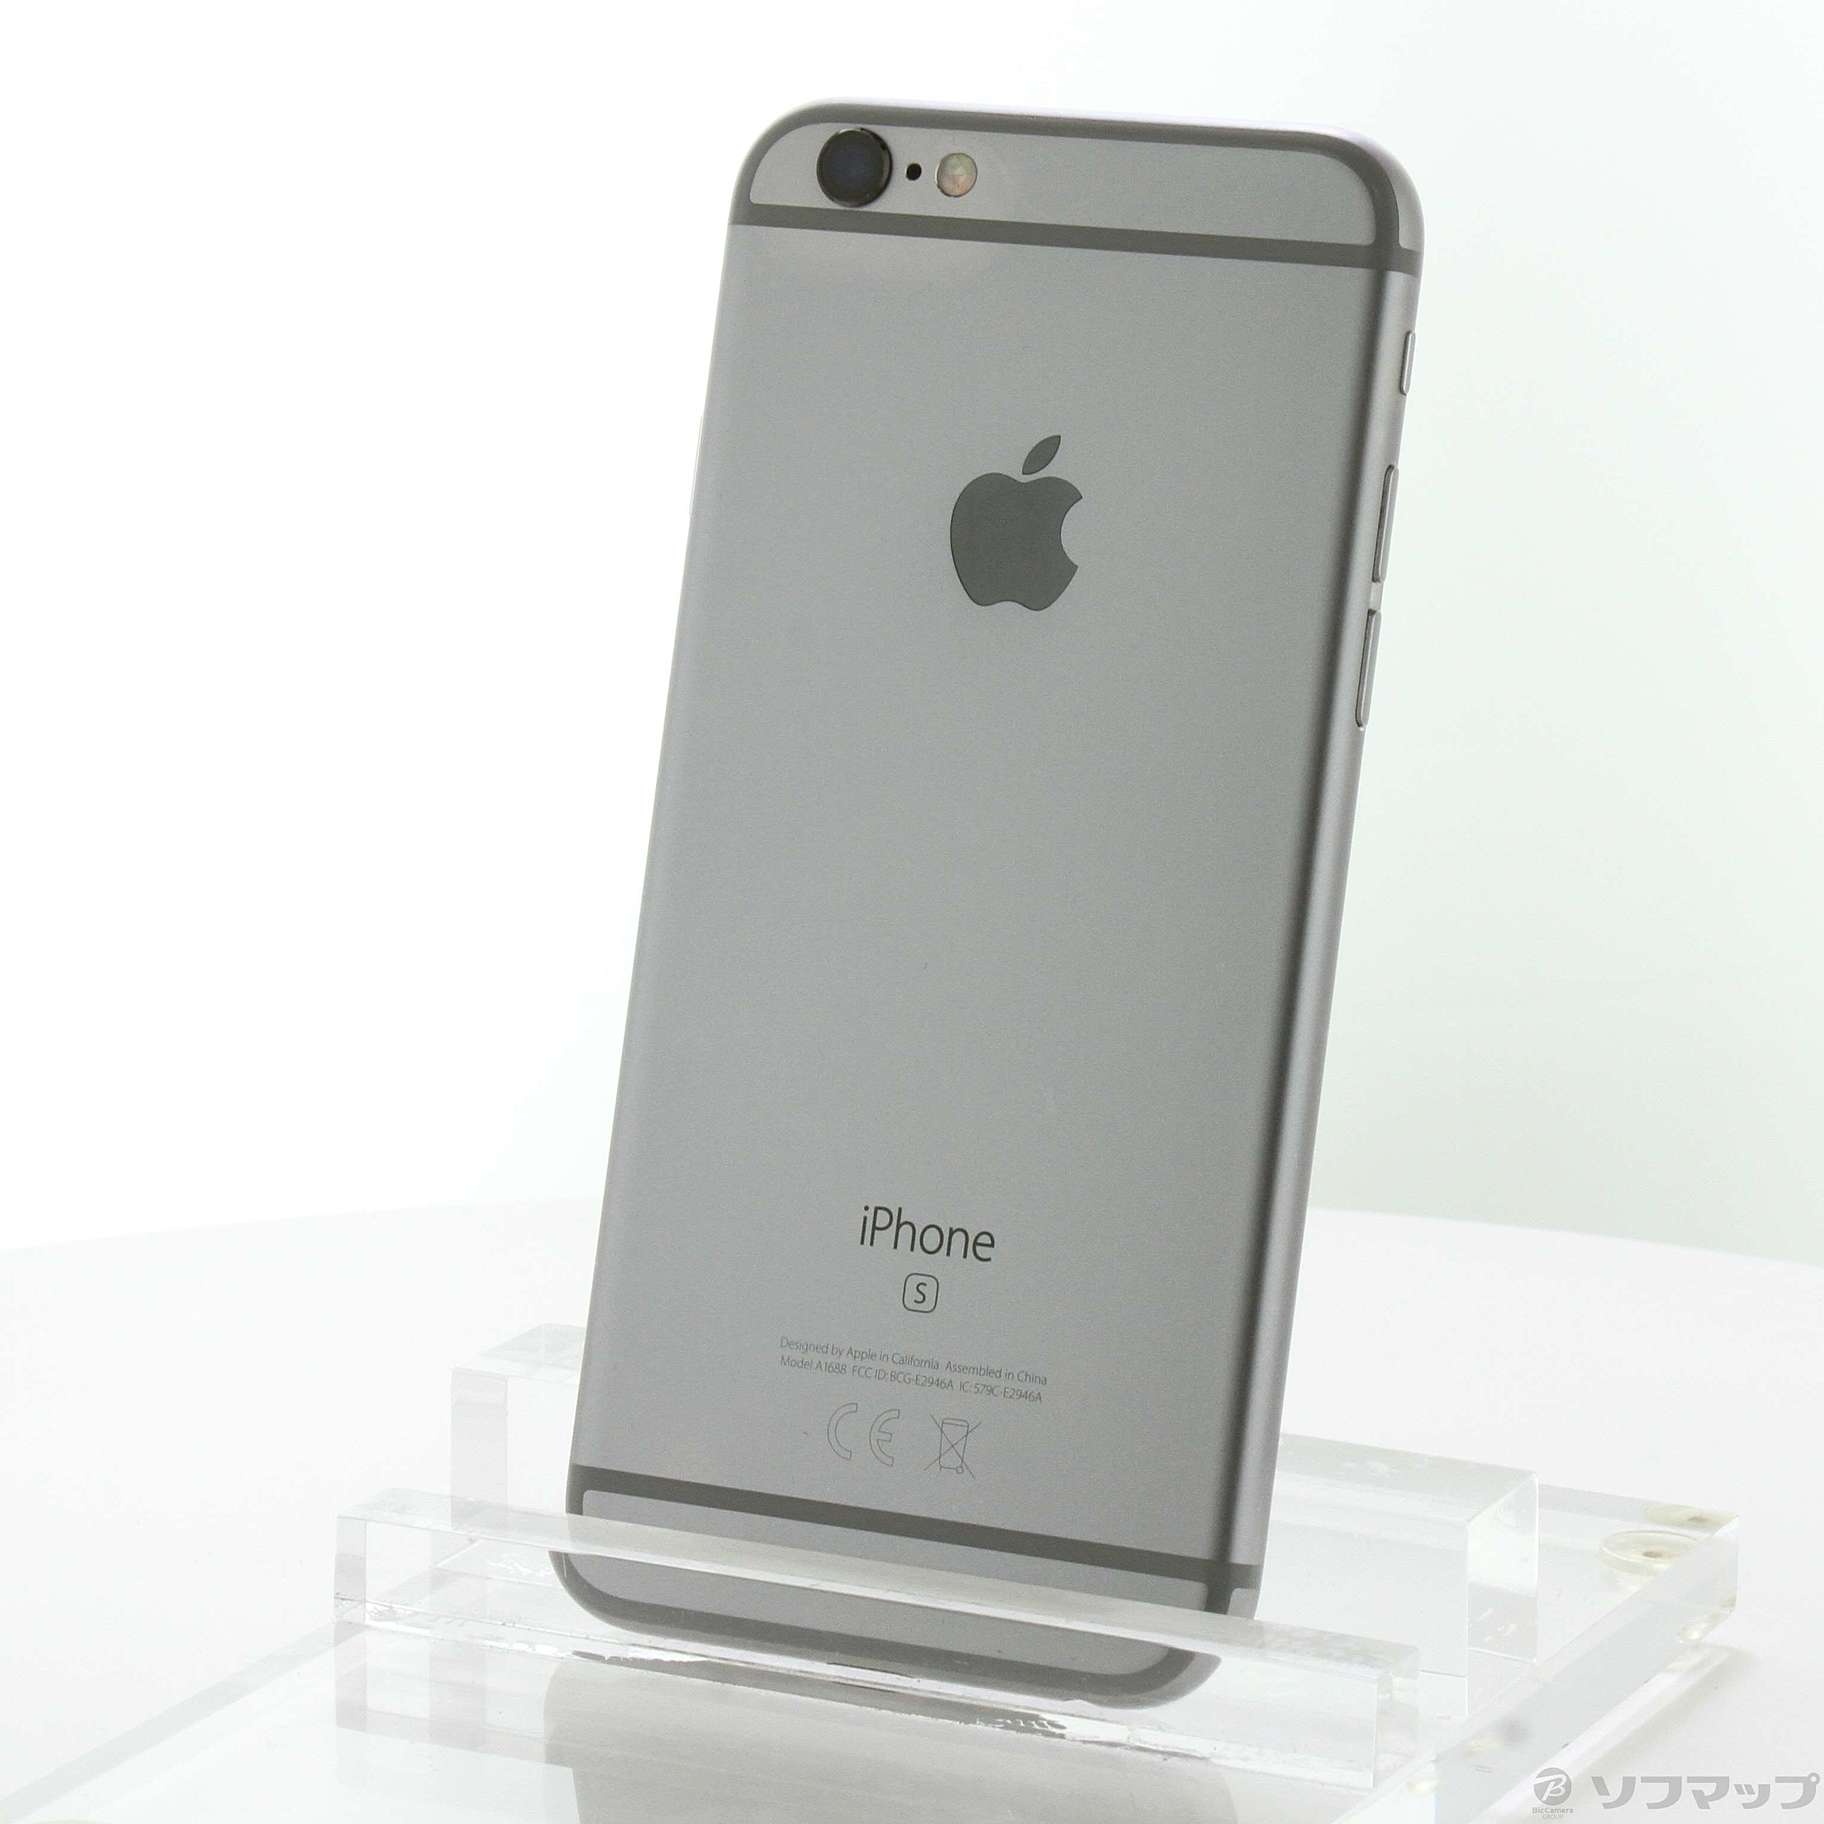 iPhone6s 32GB SIMフリー